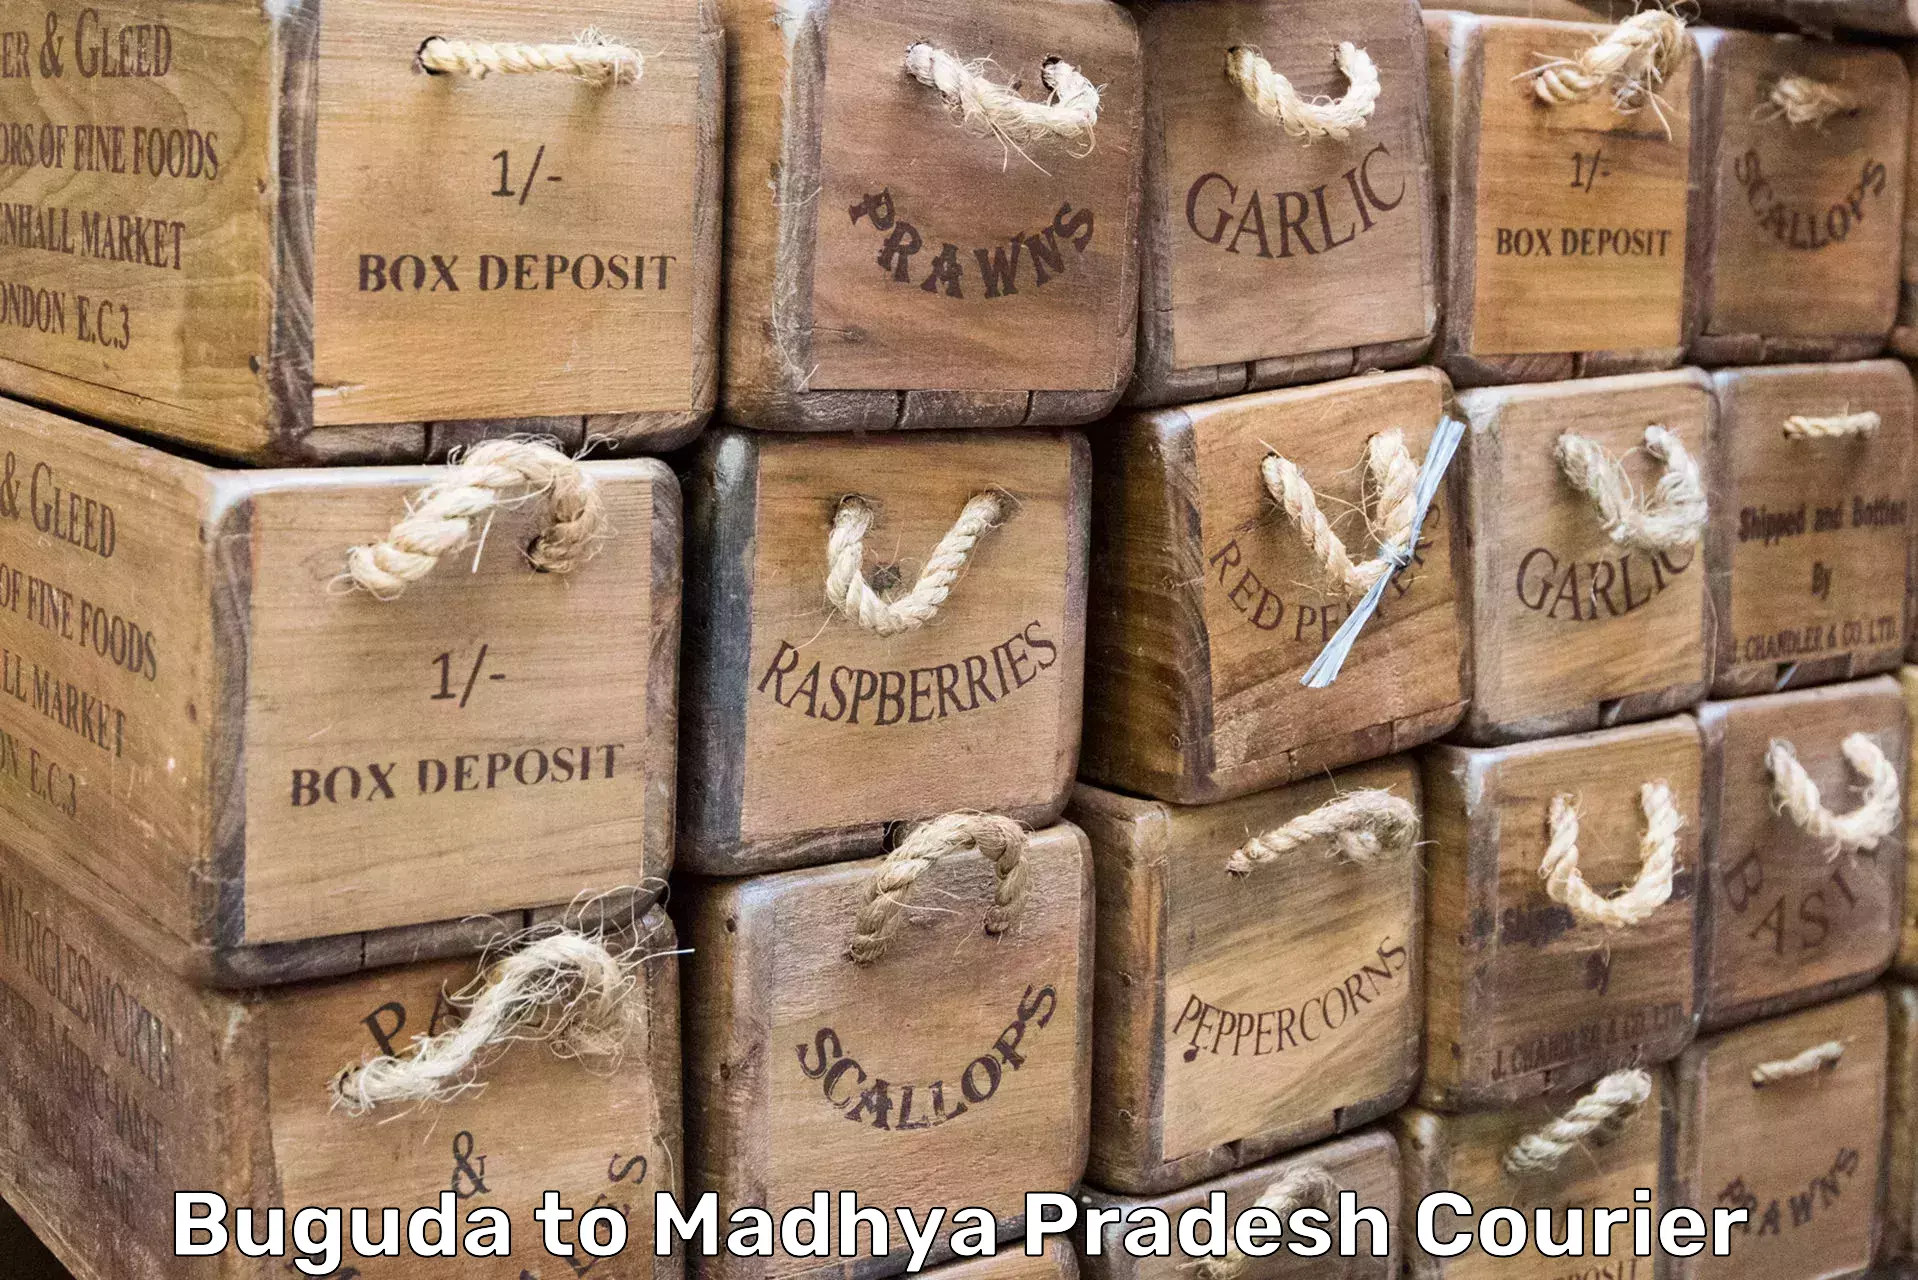 Furniture delivery service Buguda to Depalpur